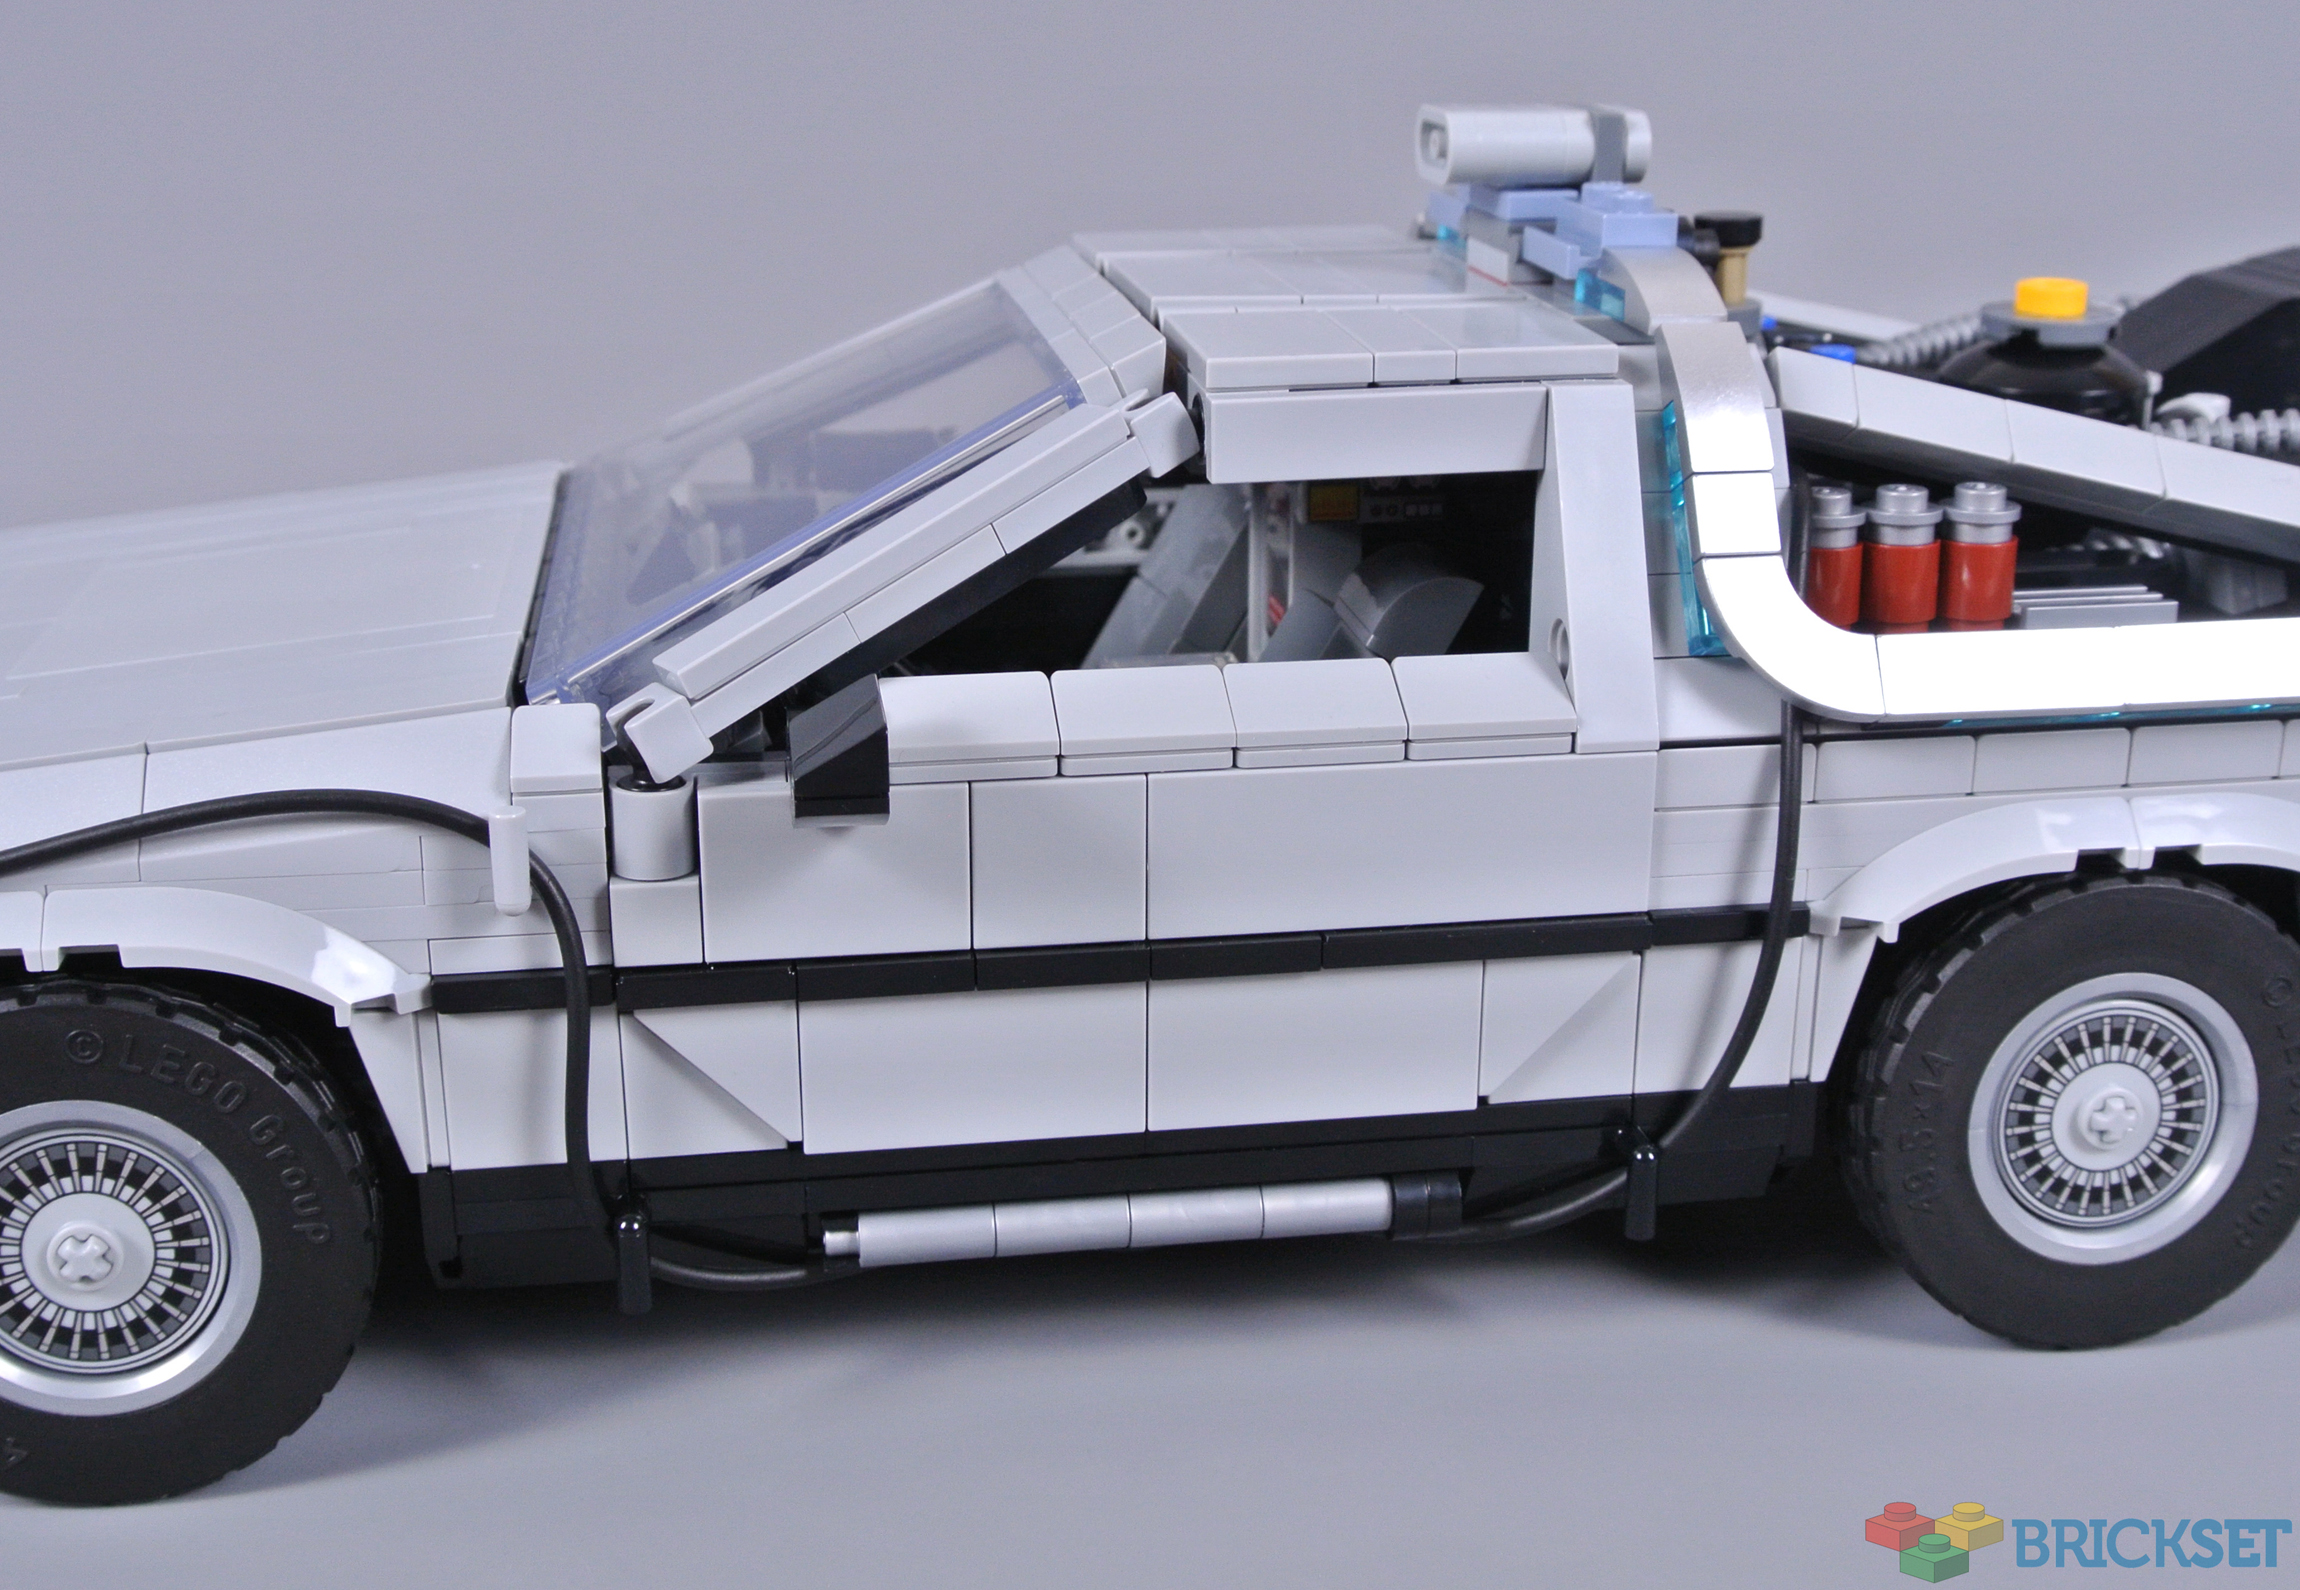 LEGO DeLorean UCS Back to the Future Car MOC David Slater Review